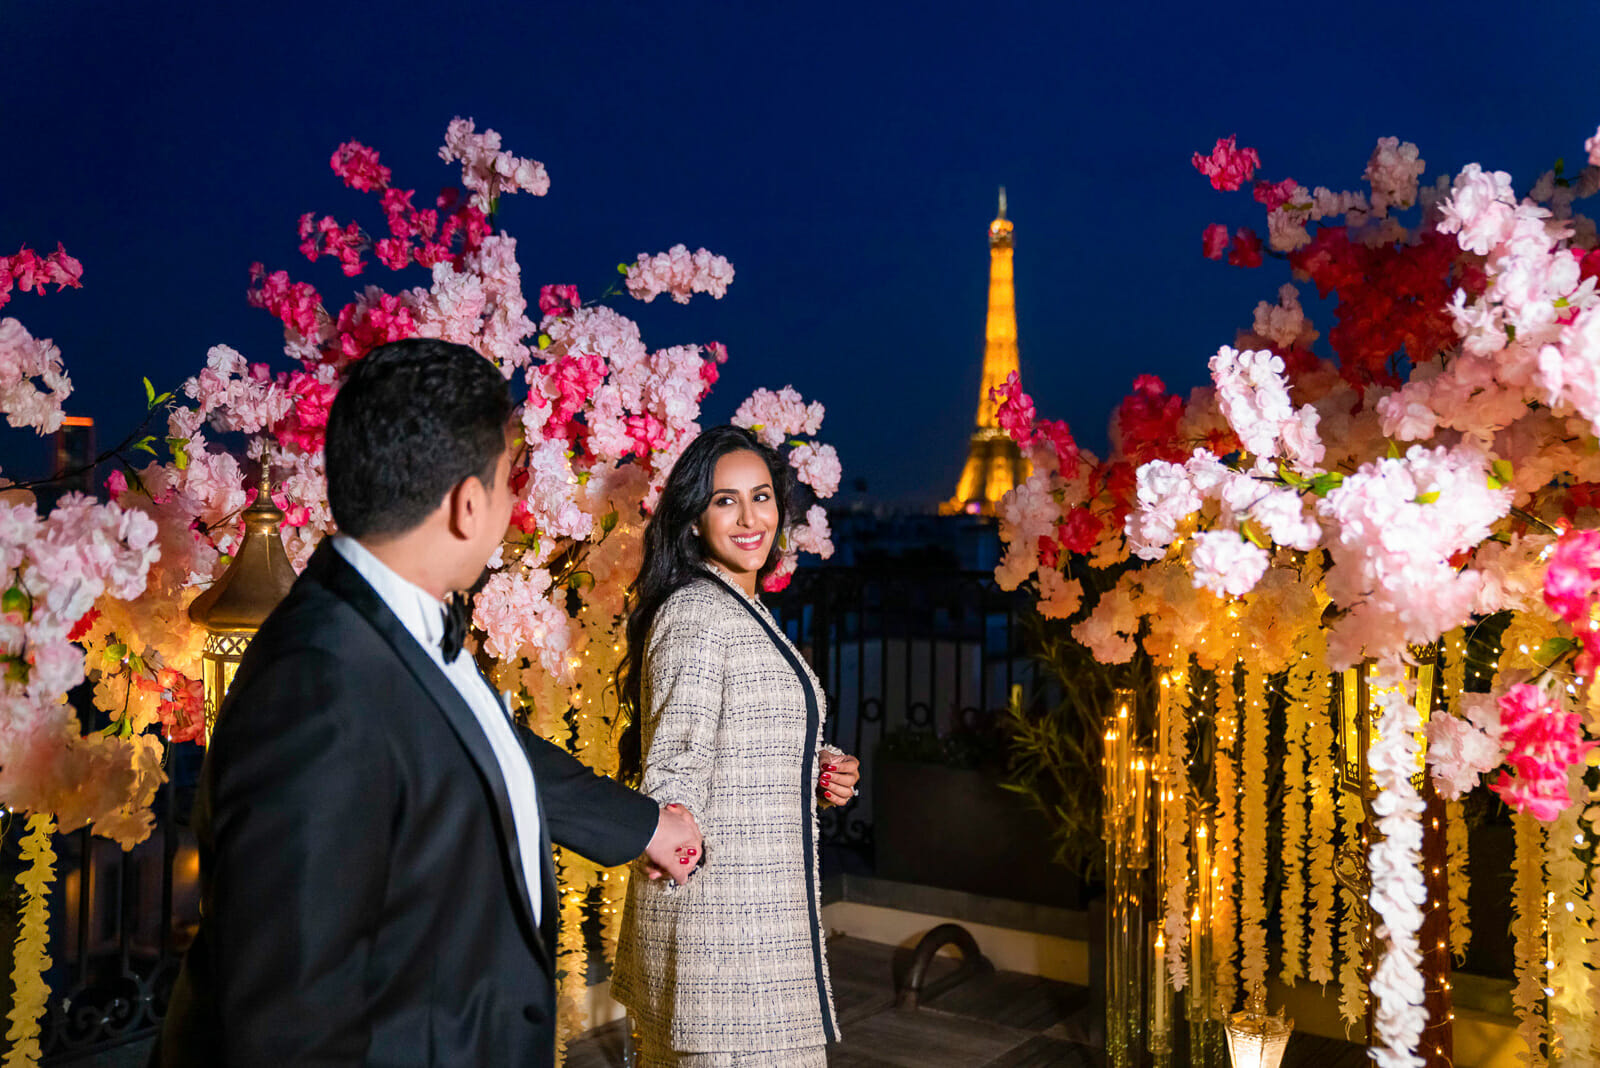 Peninsula Hotel Paris Luxury Marriage Proposal in Paris